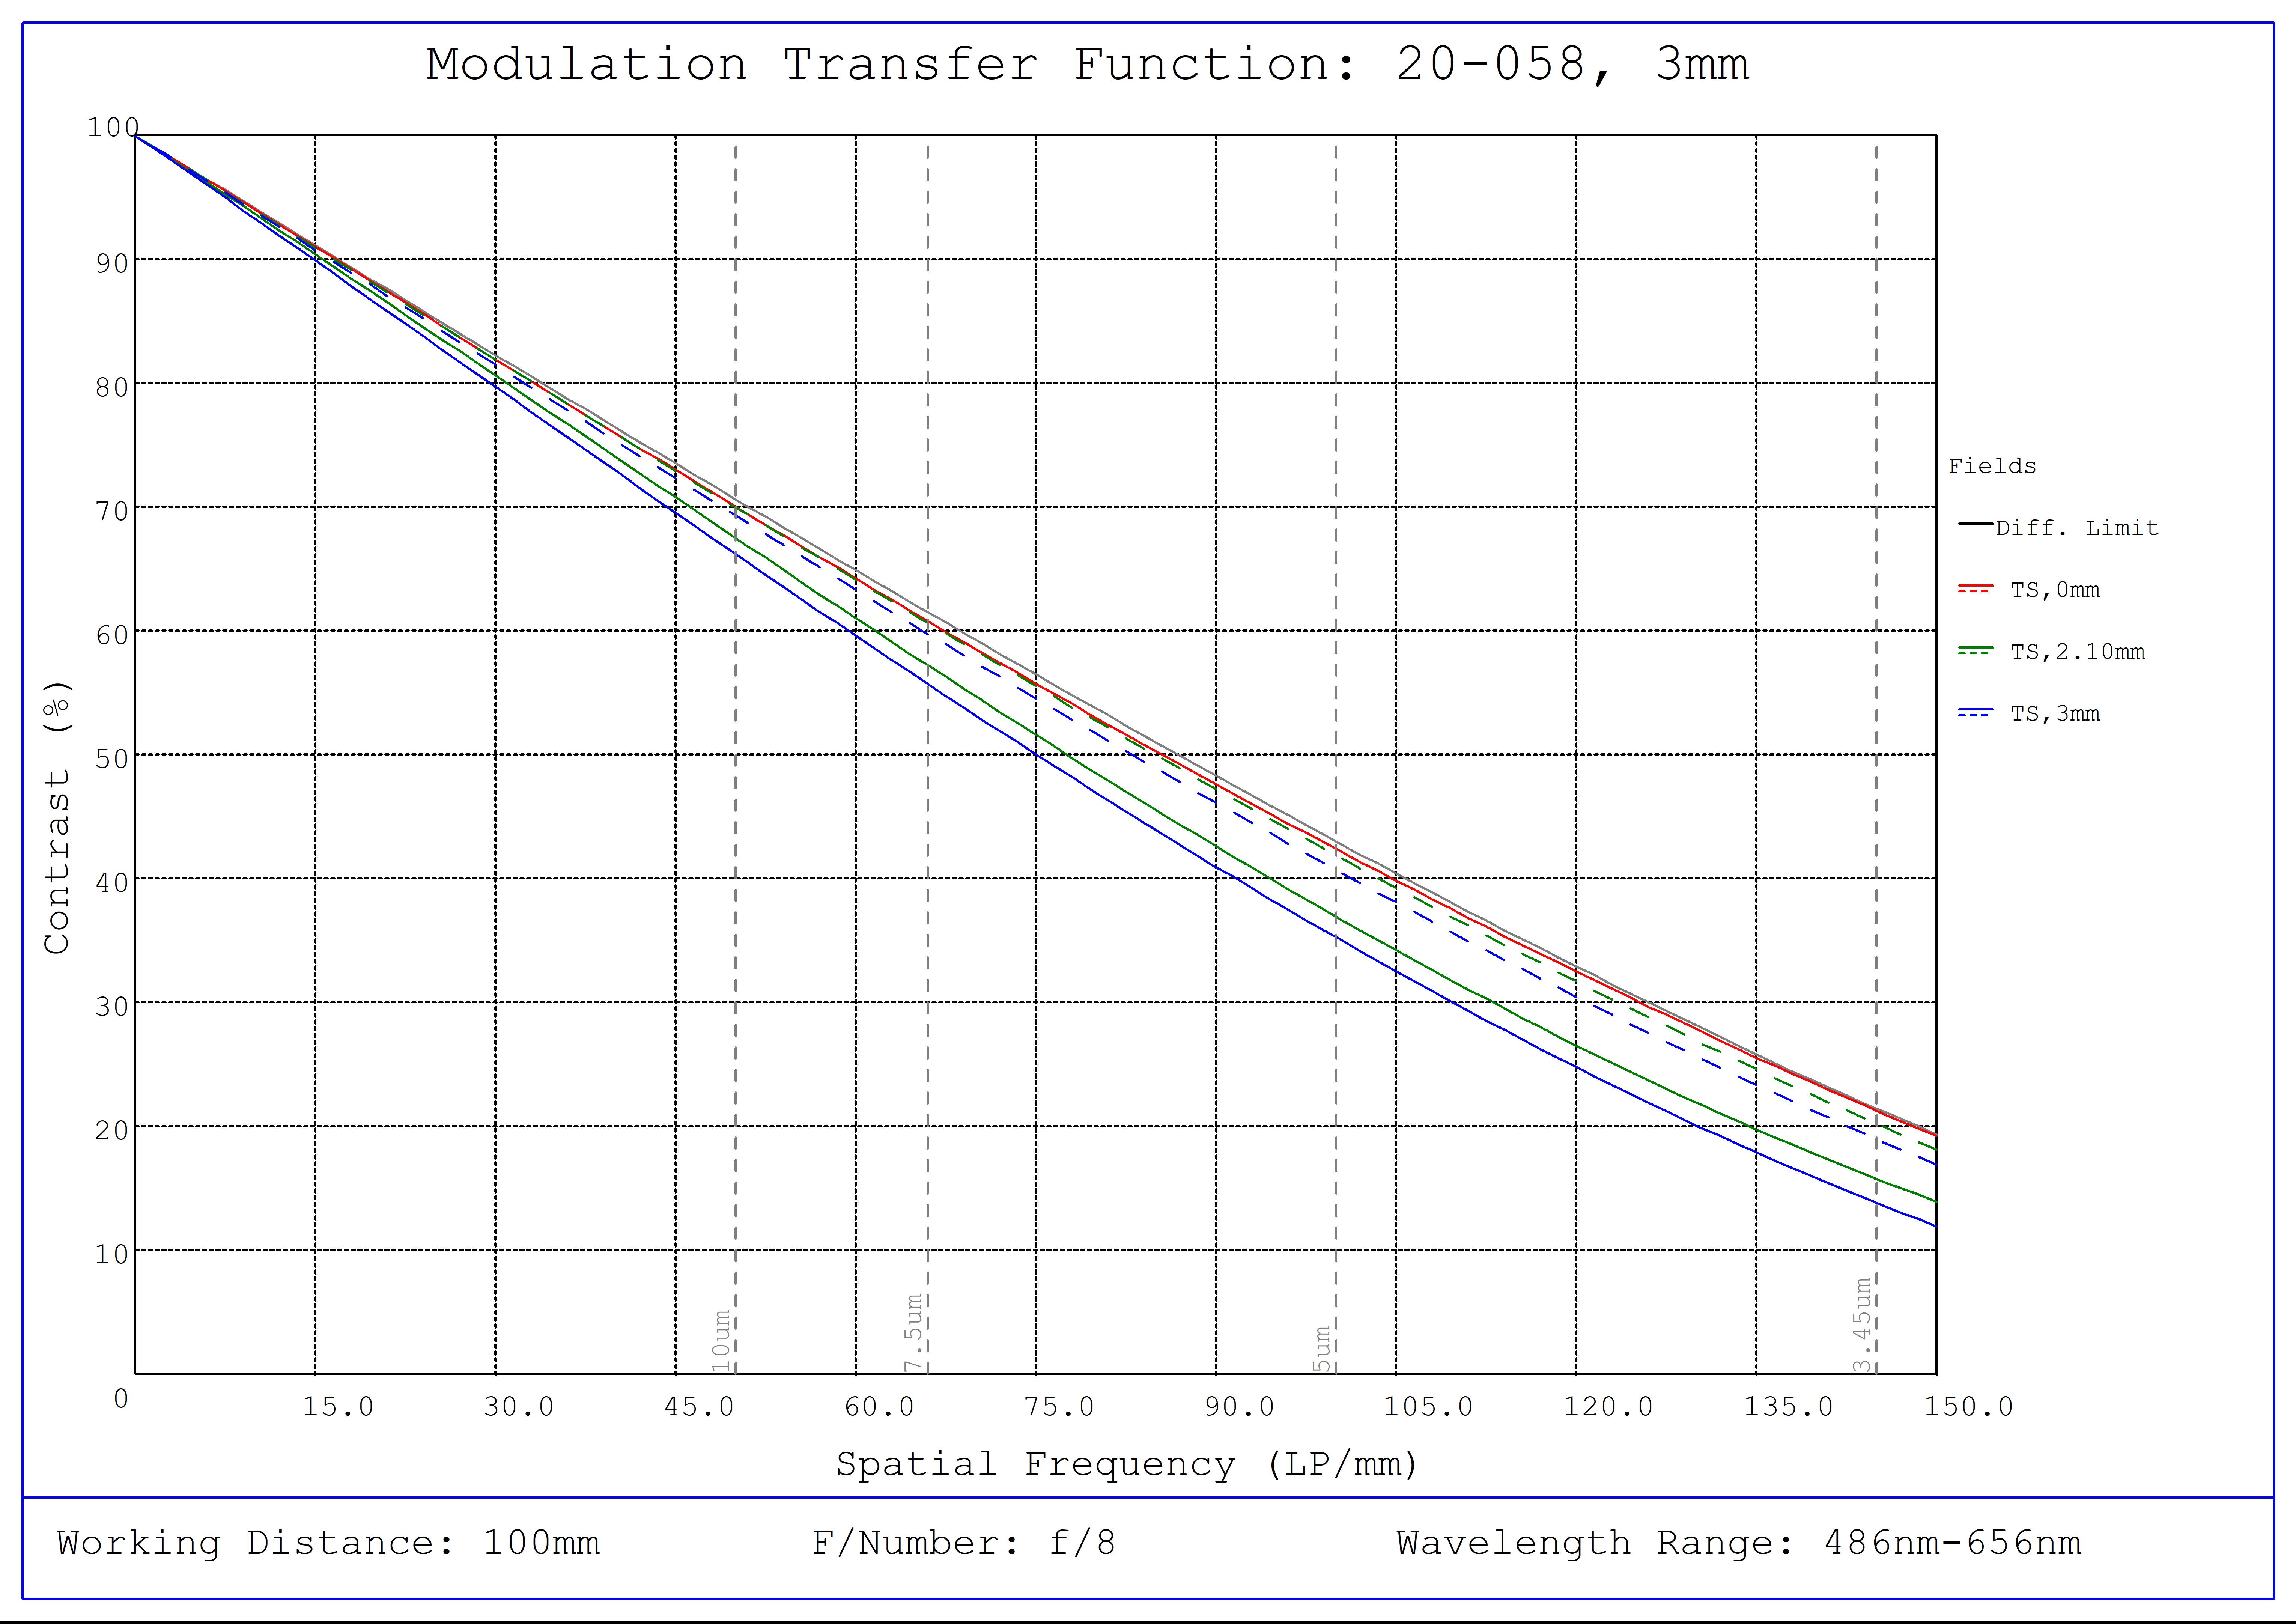 #20-058, 3mm FL f/8.0, IR-Cut Blue Series M12 Lens, Modulated Transfer Function (MTF) Plot, 100mm Working Distance, f8